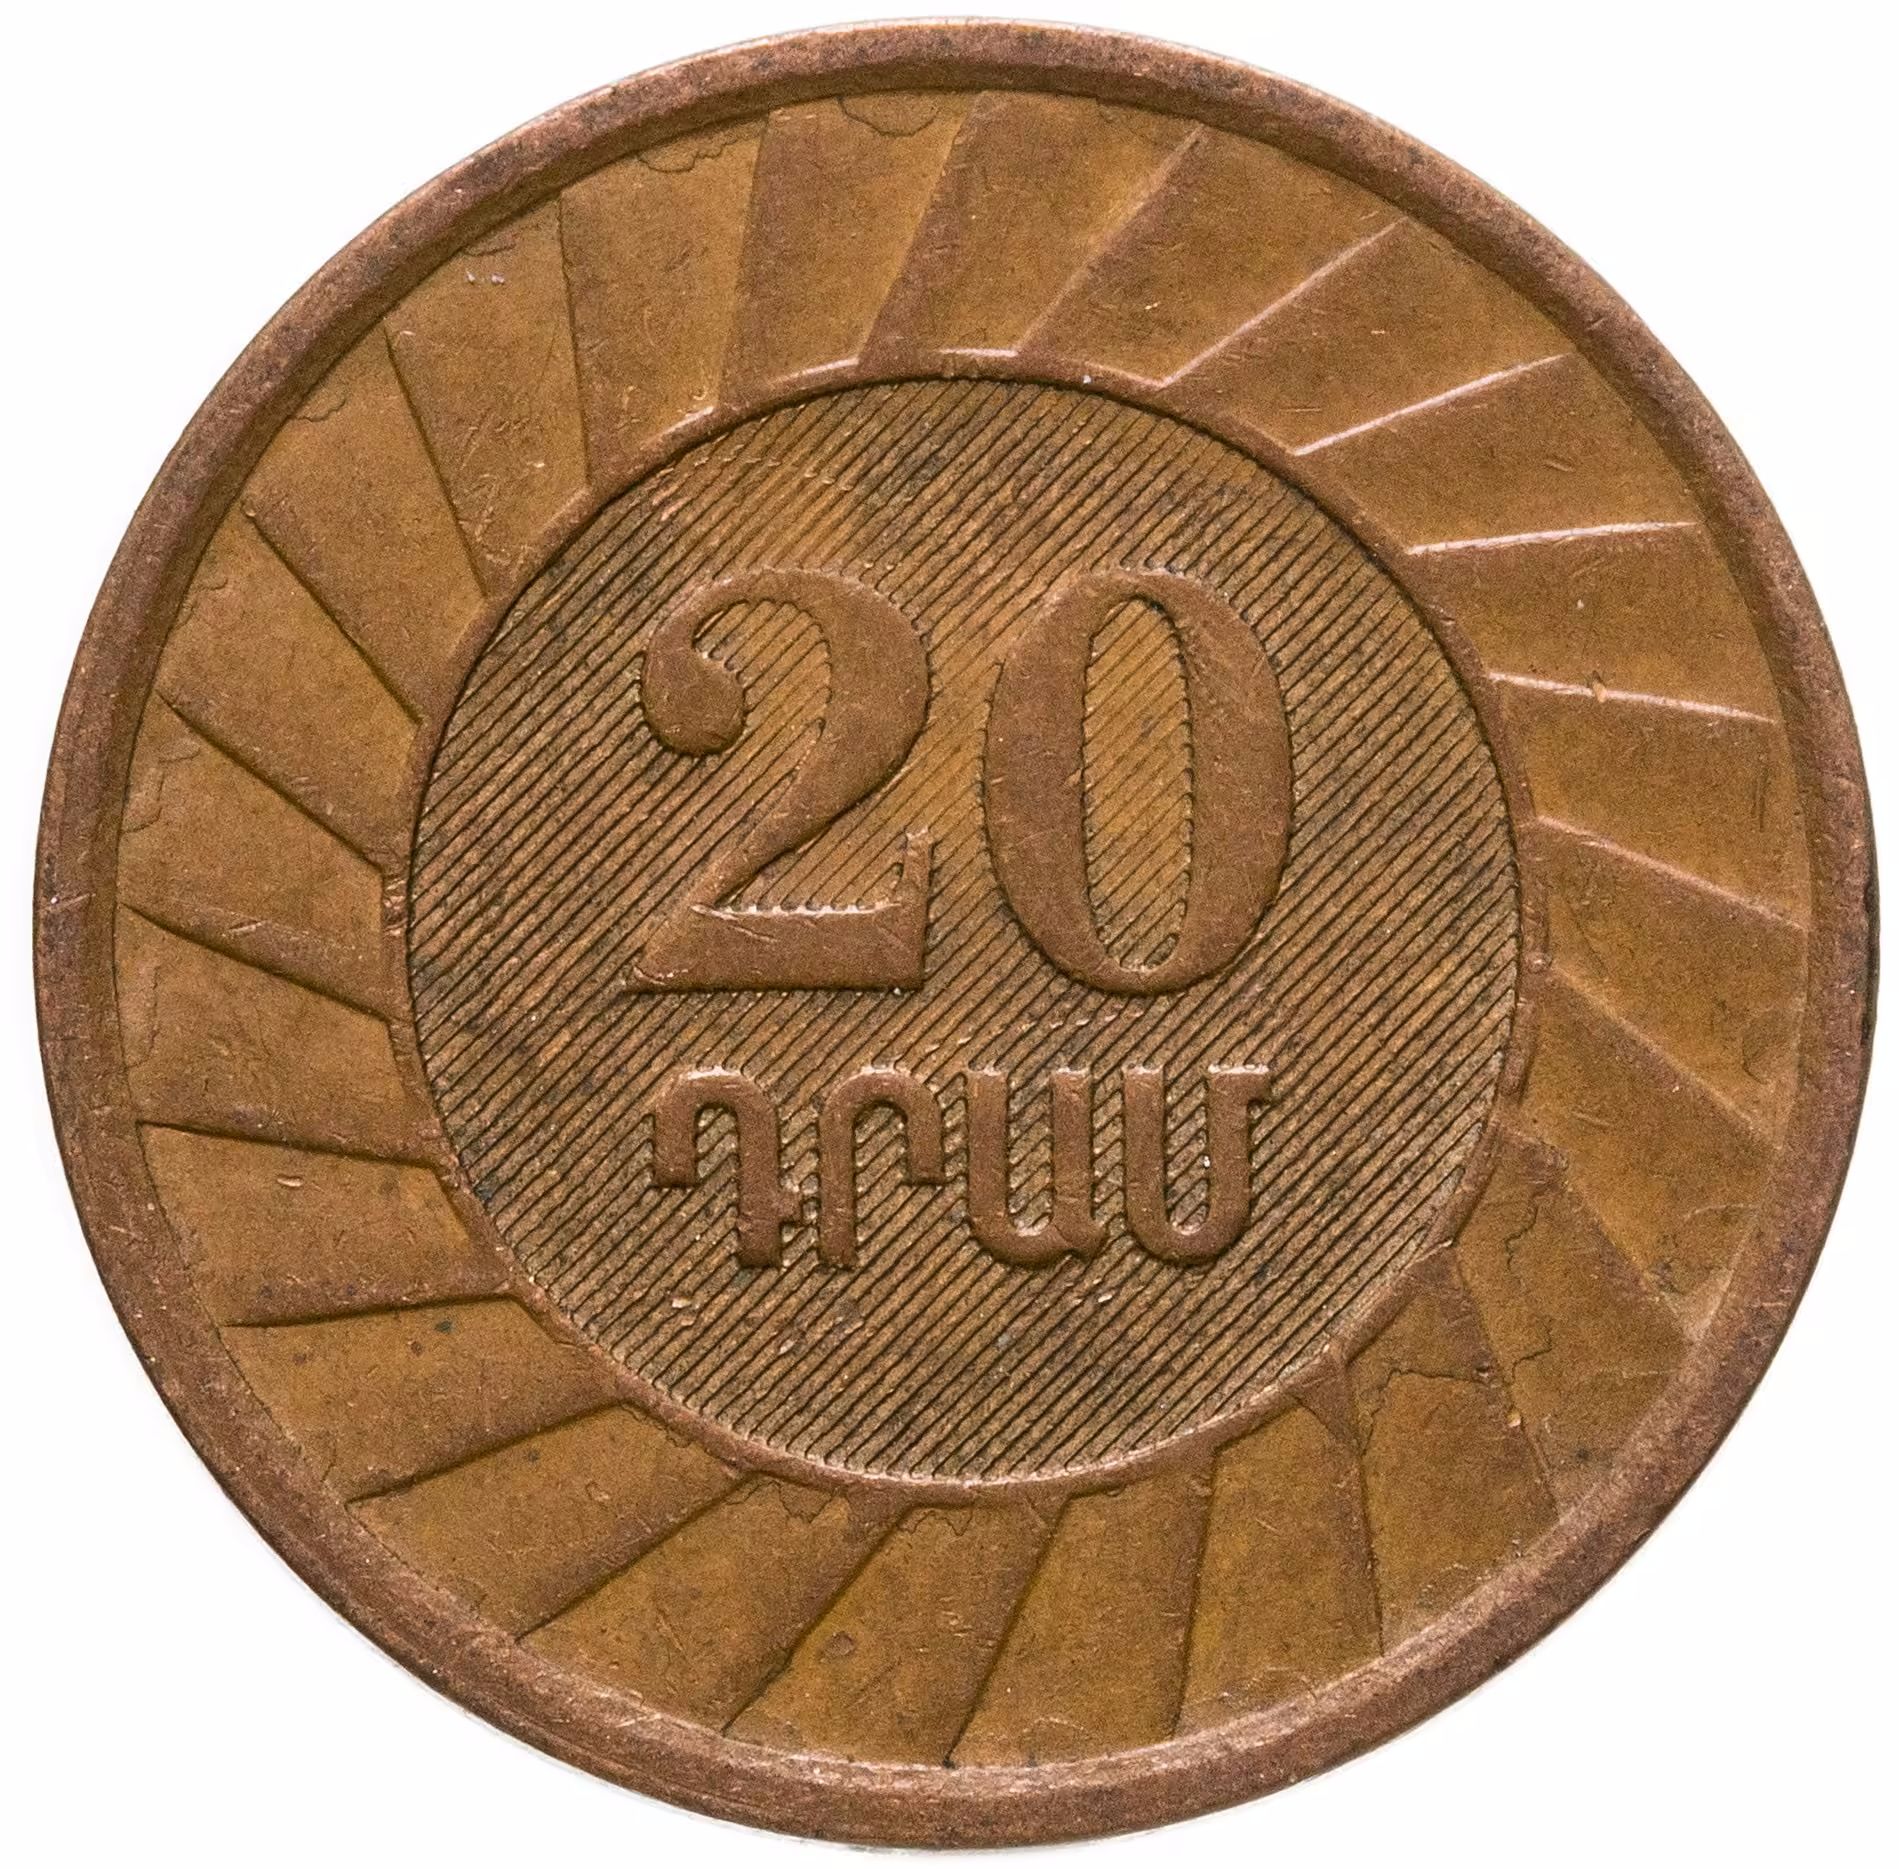 300 драмов в рублях. 20 Драмов 2003 Армения. Армения драм монеты 20. Монета Армения 20 драм 2003. Армянская монета 20 драм.